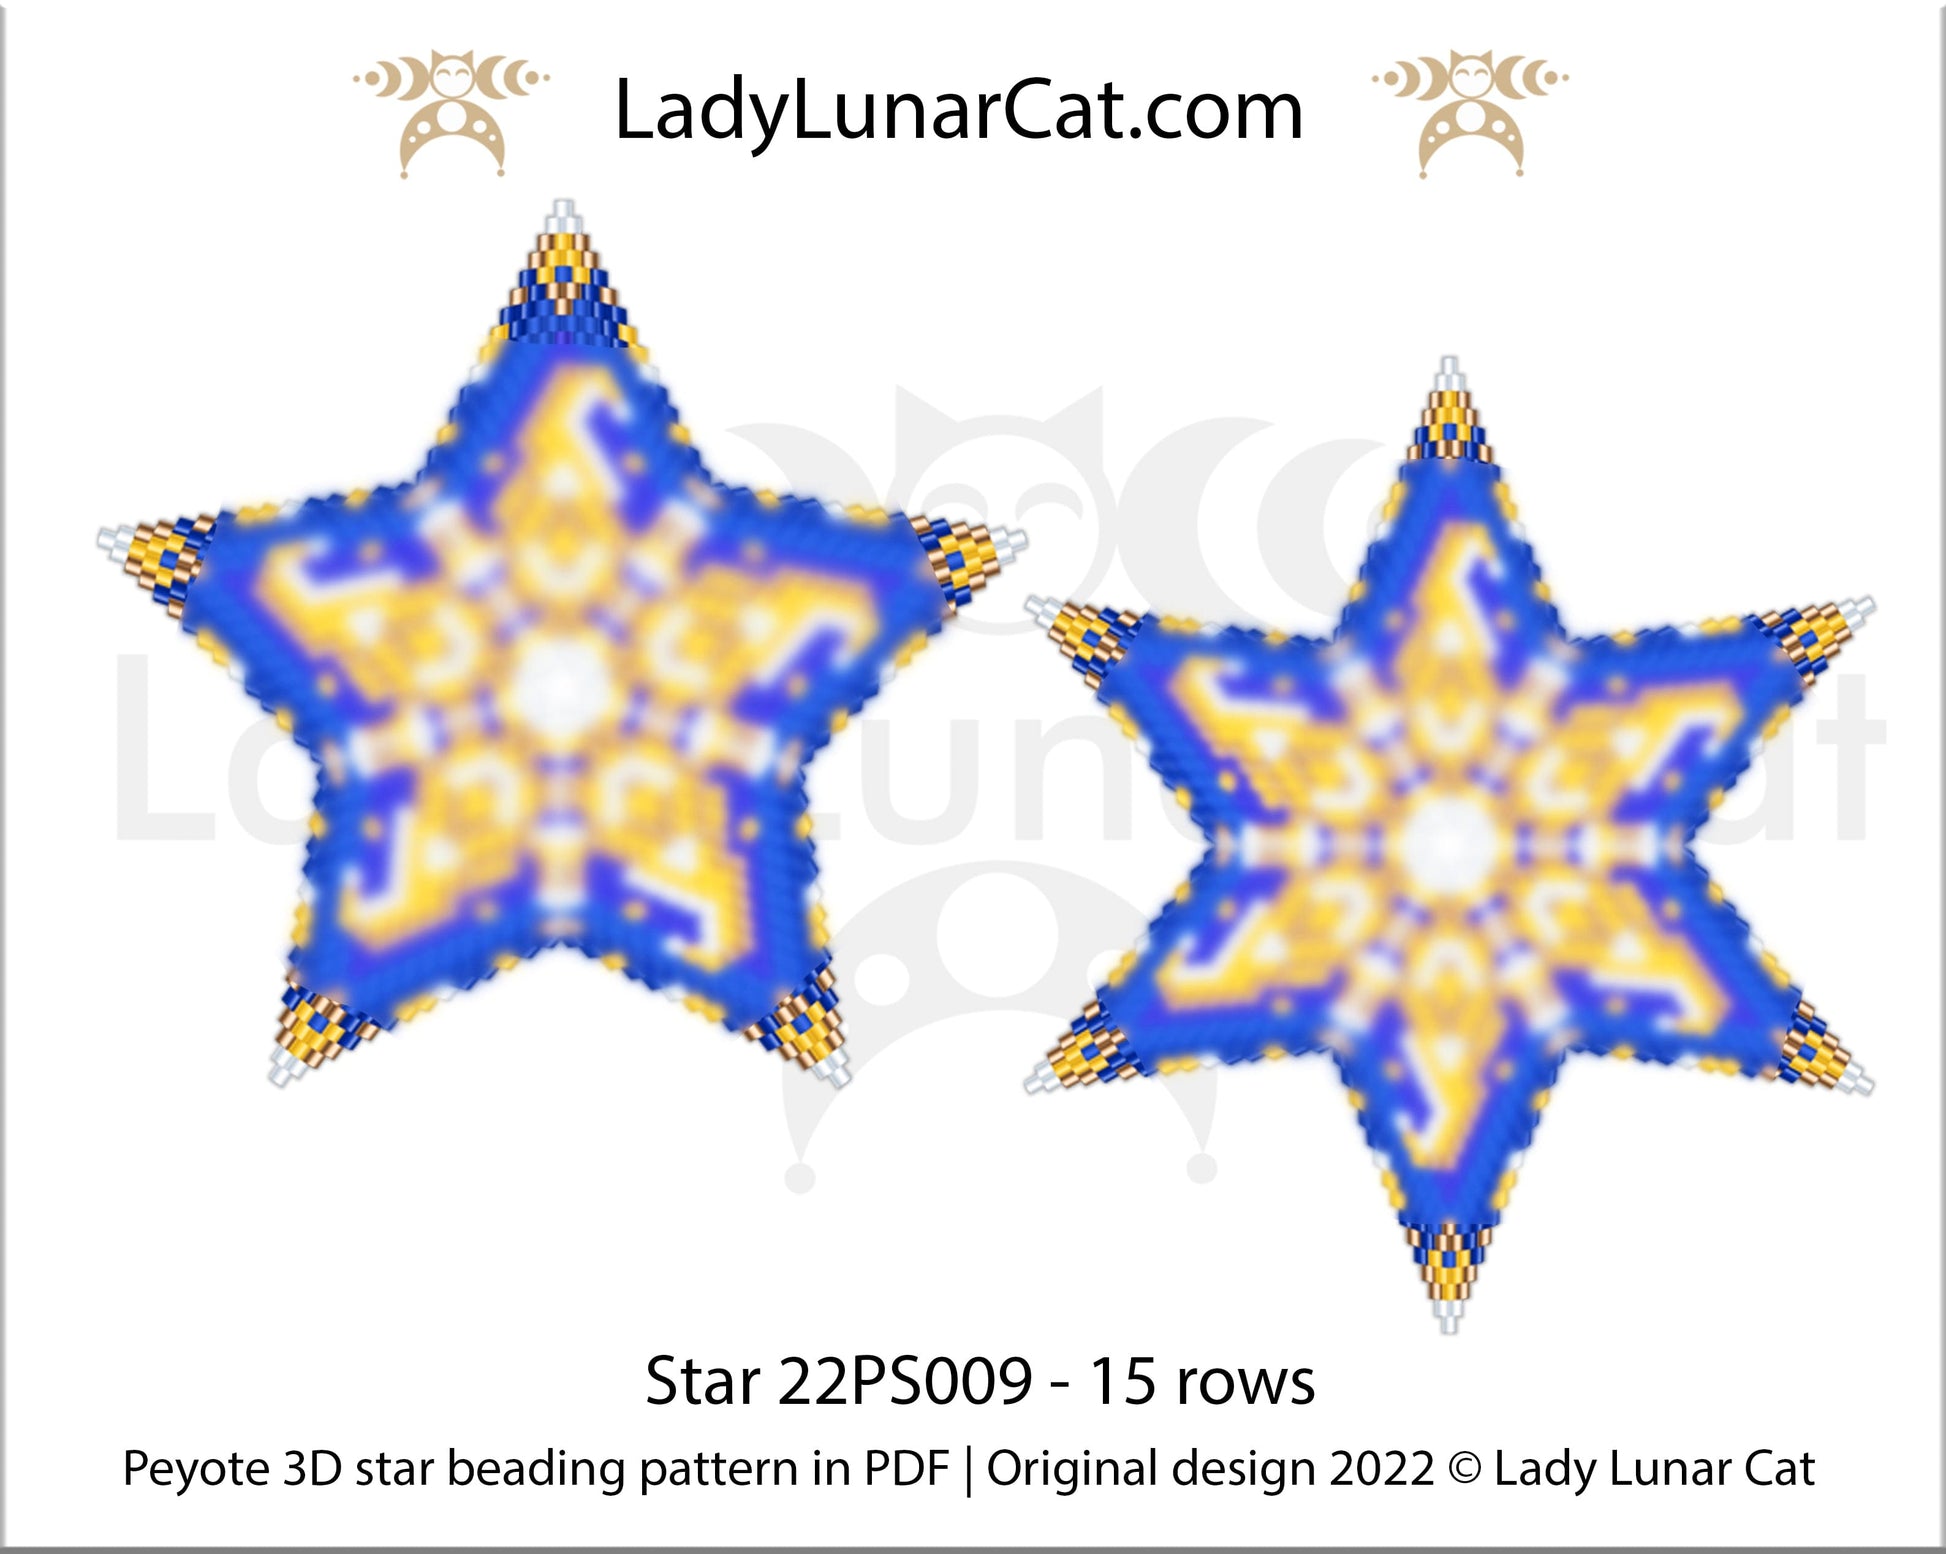 Peyote star pattern for beading - Star 22PS009 15 rows LadyLunarCat